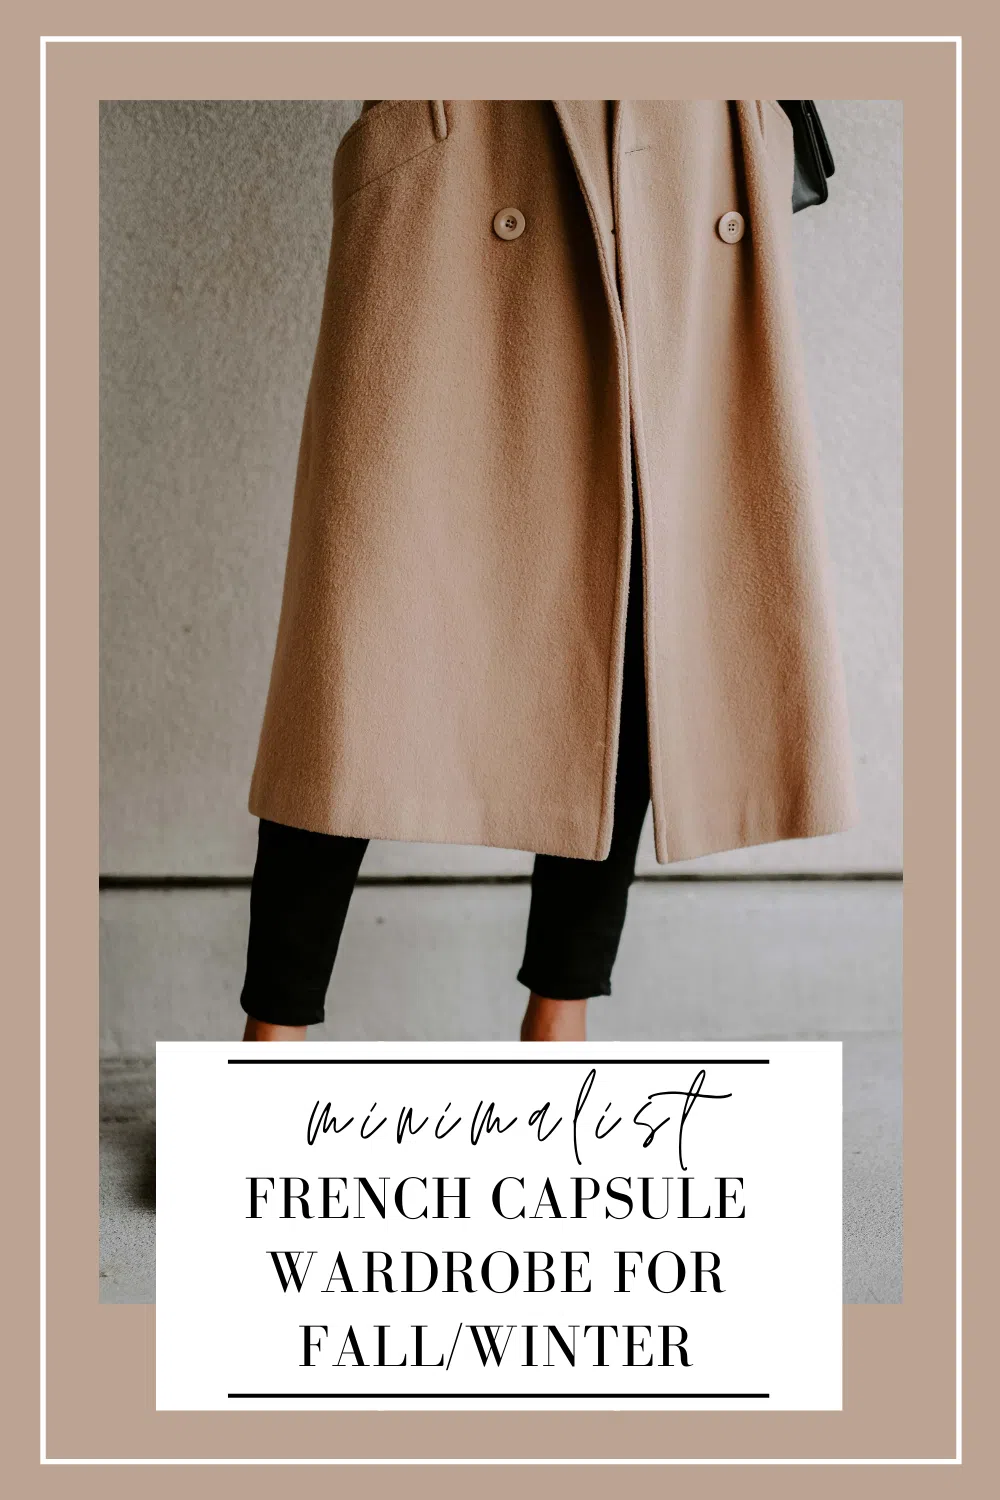 french capsule wardrobe fall:winter